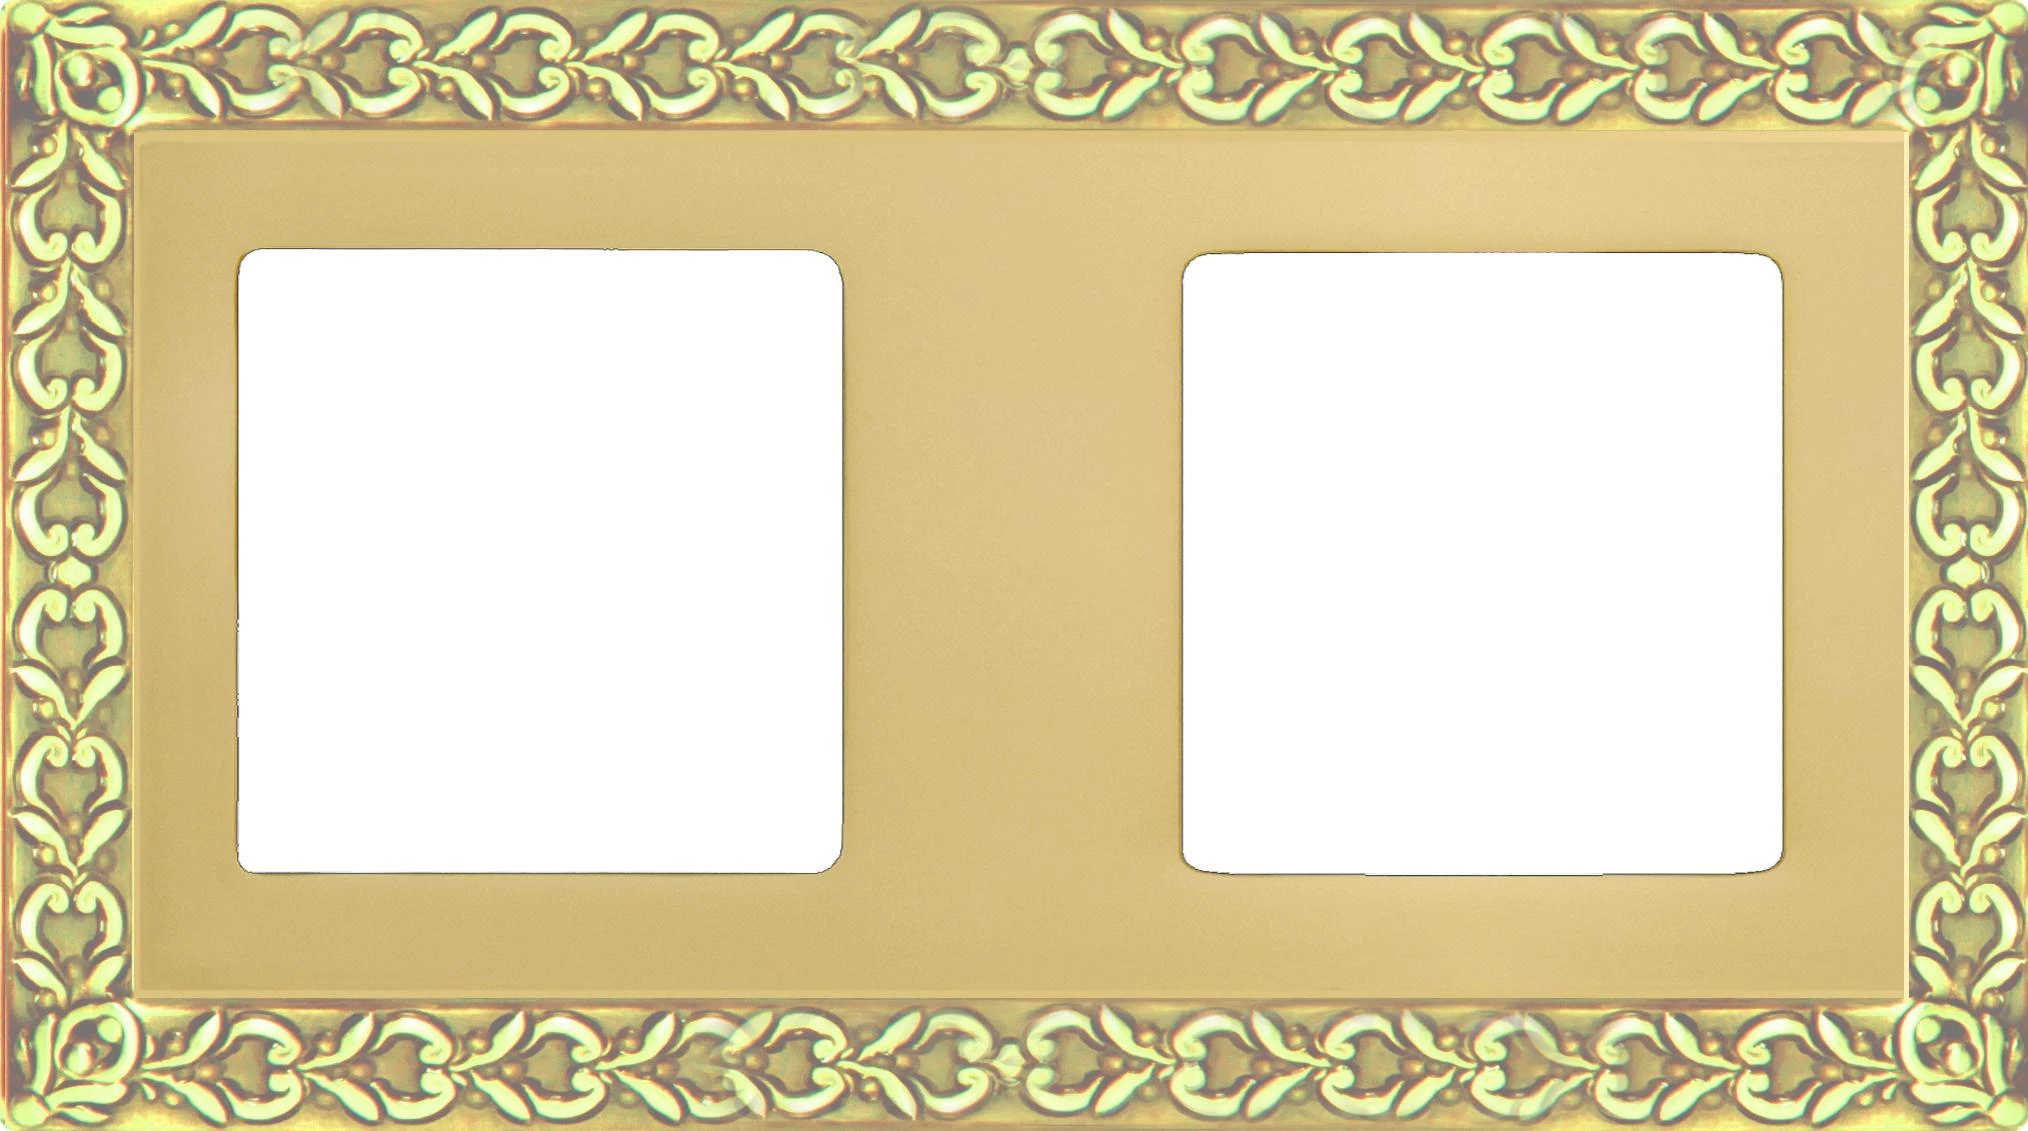  артикул FD01222OB название Рамка 2-ая (двойная), цвет Светлое золото, San Sebastian, Fede